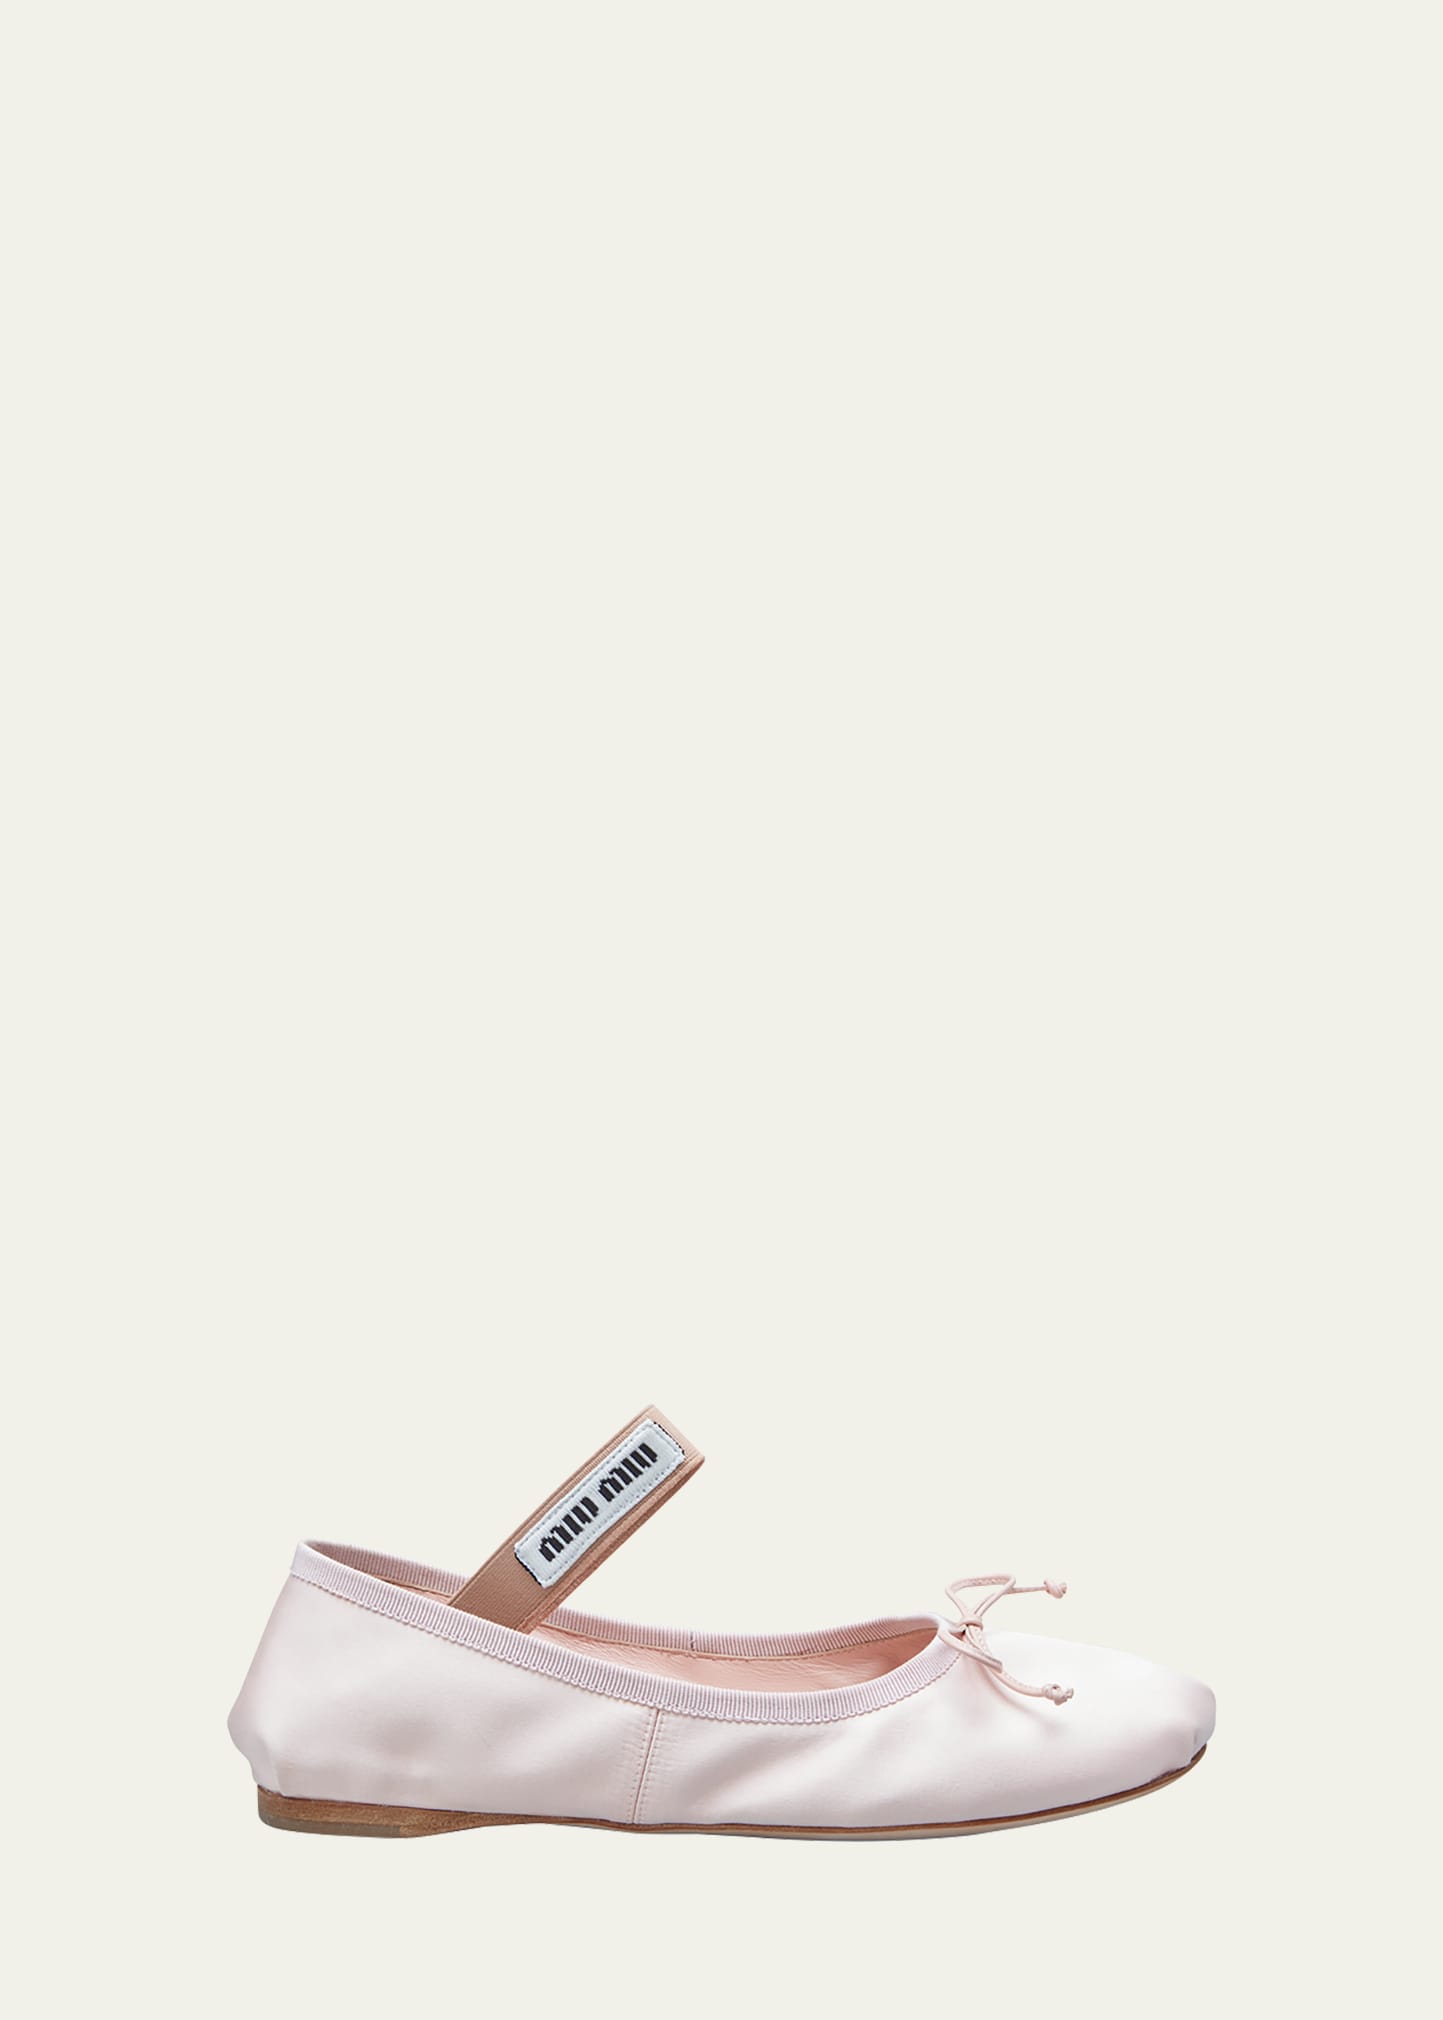 Designer Miu Miu Bow-Detailed Slip-On Satin Ballerina/shoes